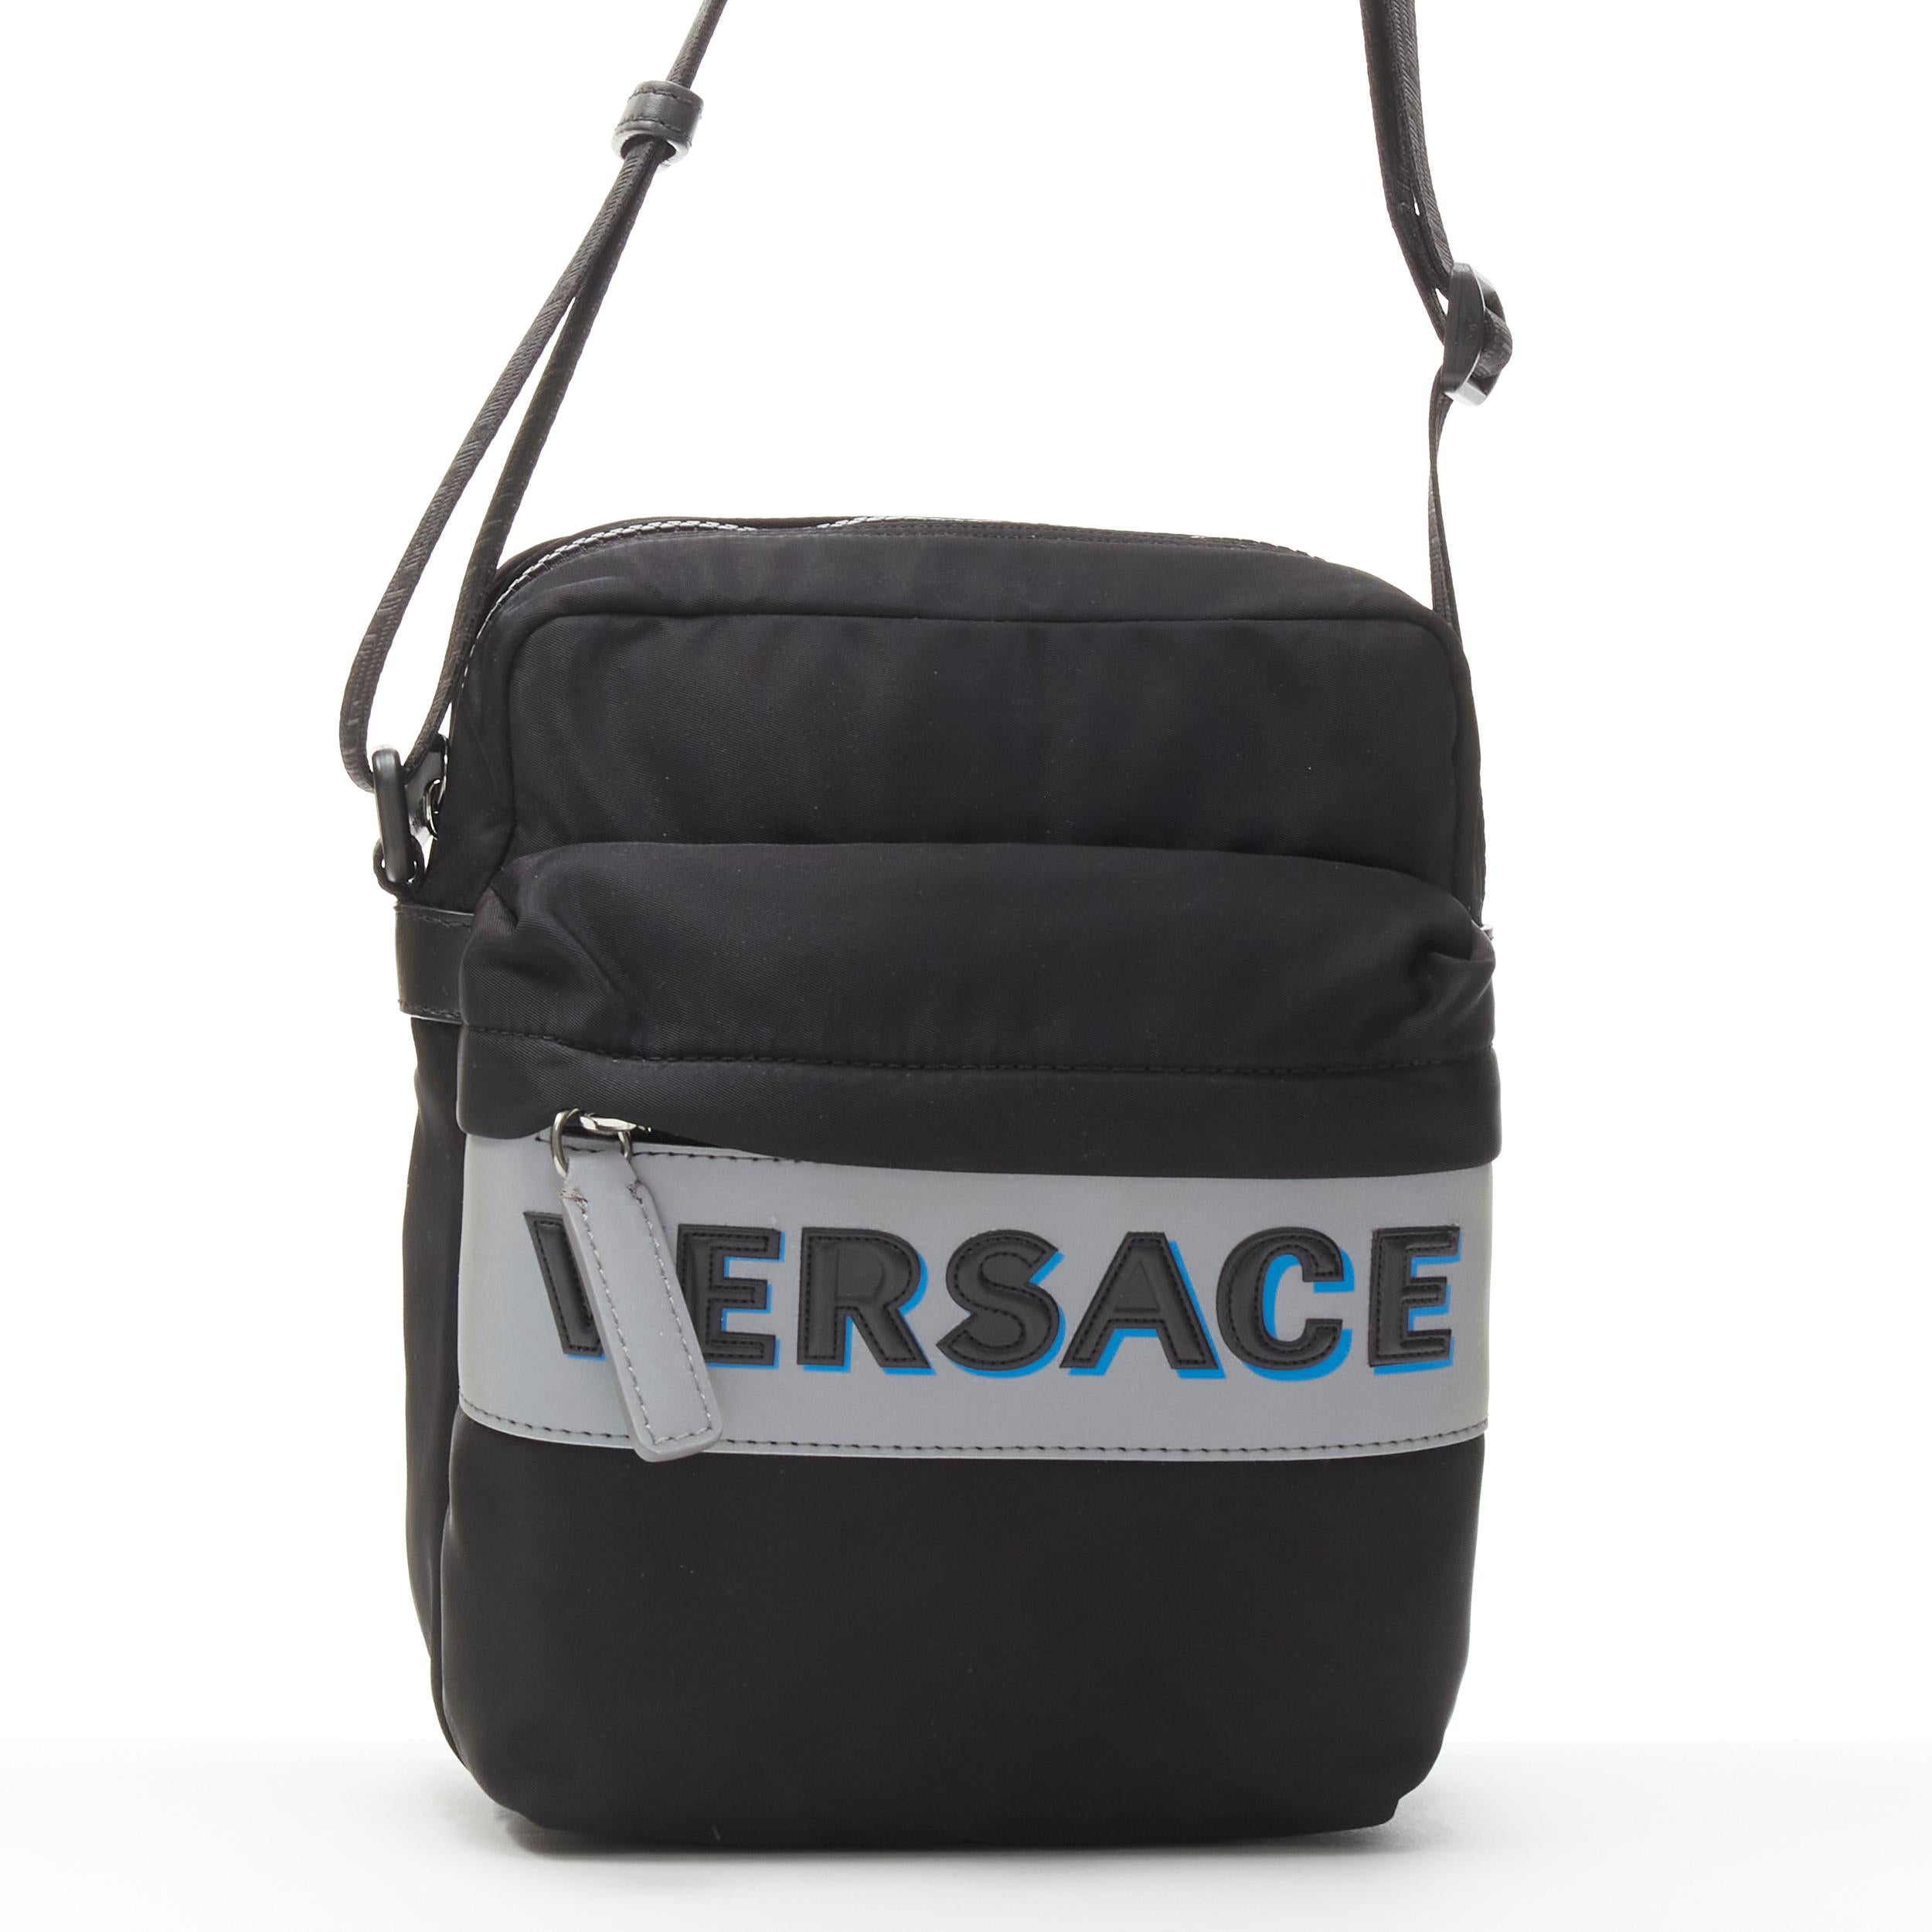 versace nylon bag